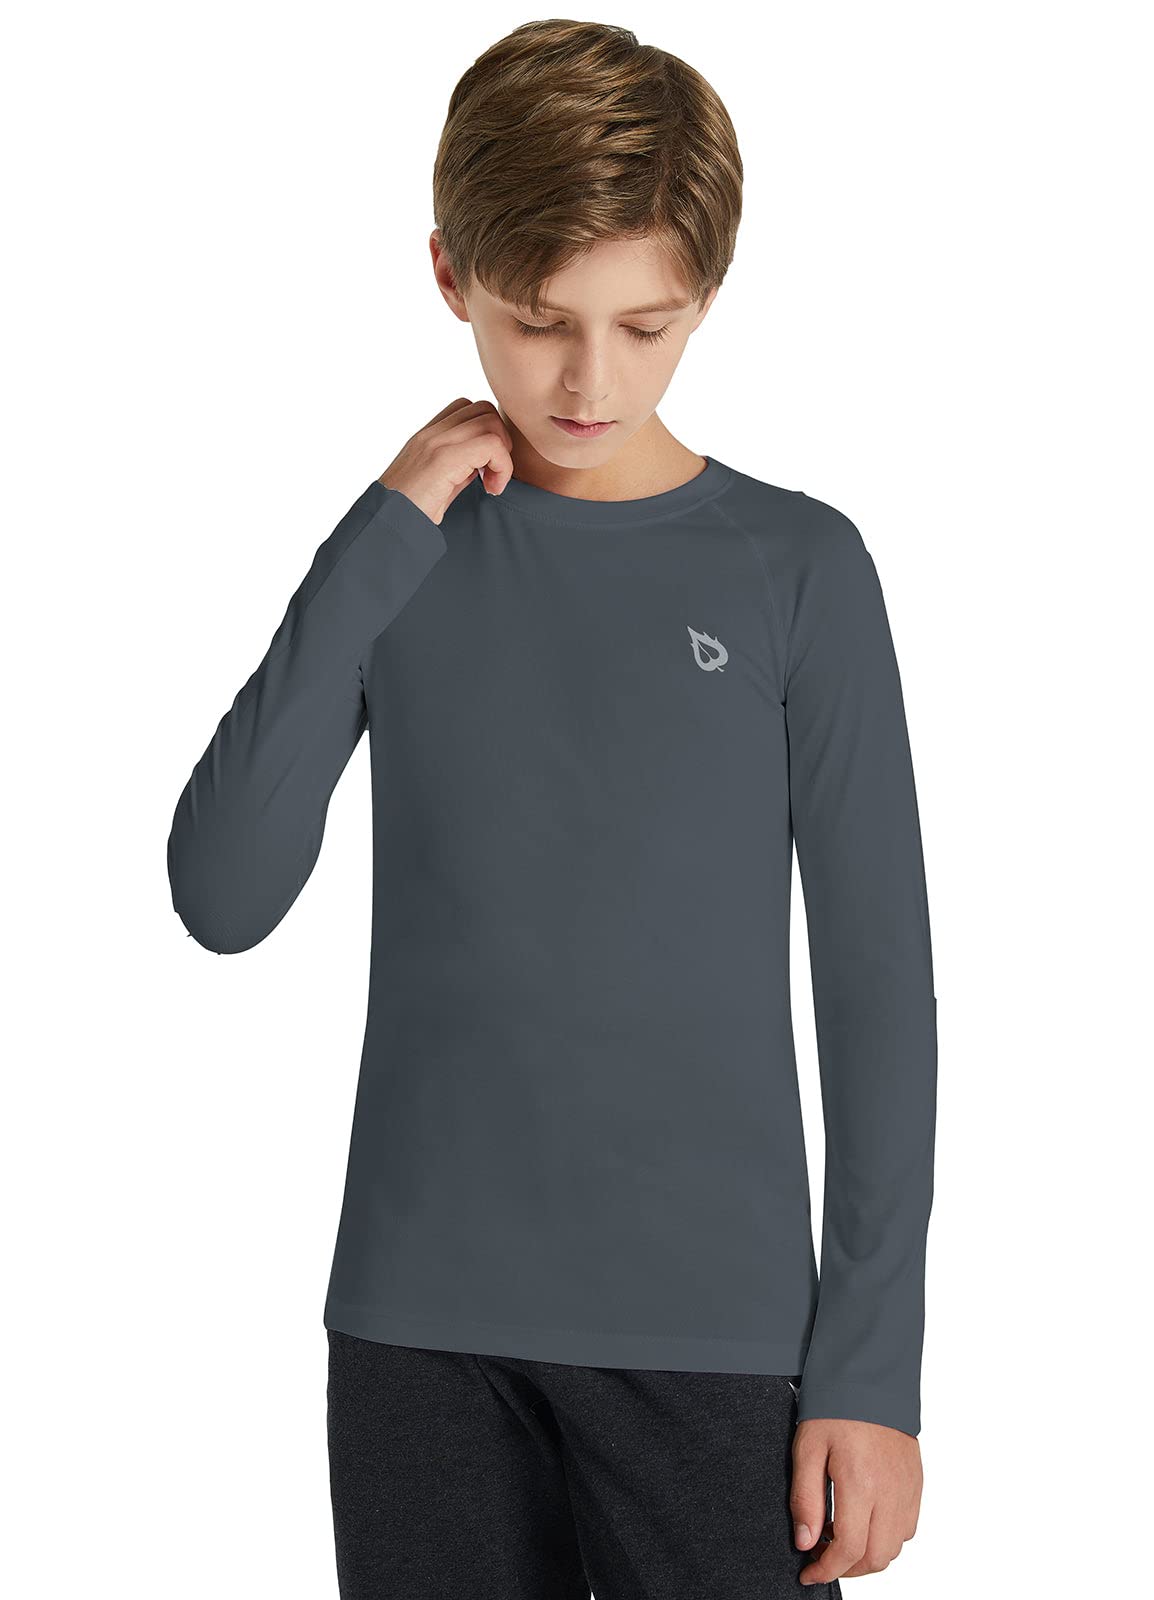 BALEAF Boys Long Sleeve Shirts Youth Compression Undershirts Kids Baseball Football Baselayer Cold Gear Quick Dry